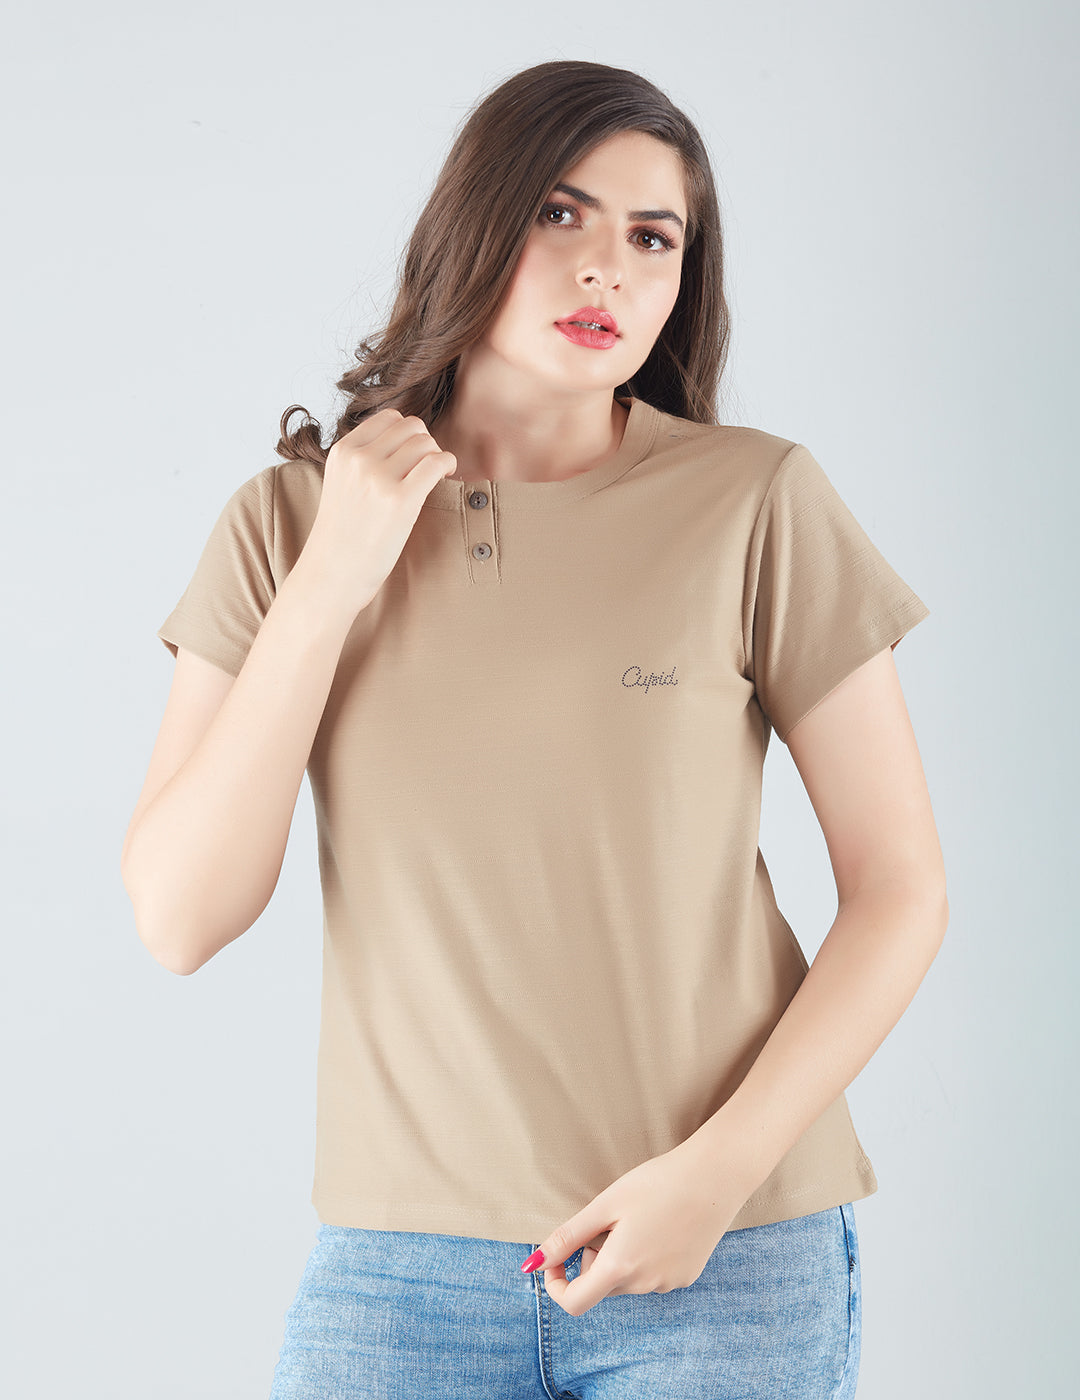 Stylish Tortilla Plain Cotton Short T-shirts For Women At Best Price